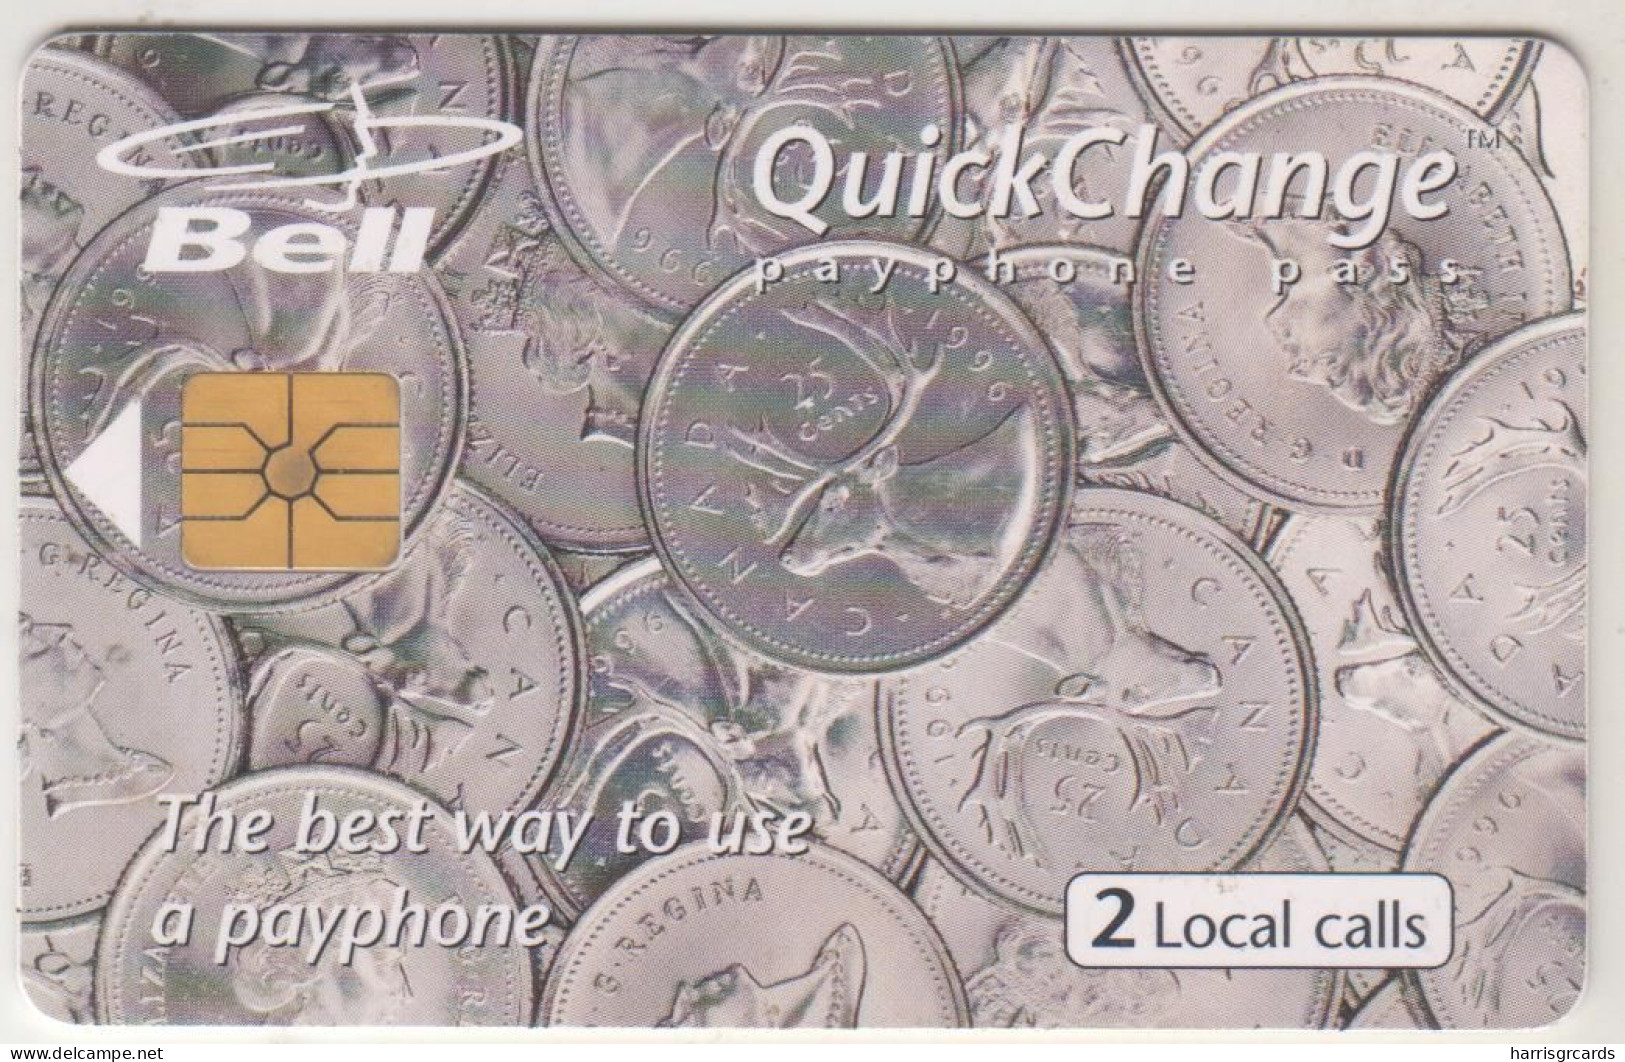 CANADA - Local Calls 25¢ , 05/97, Tirage 40.000, Used - Canada